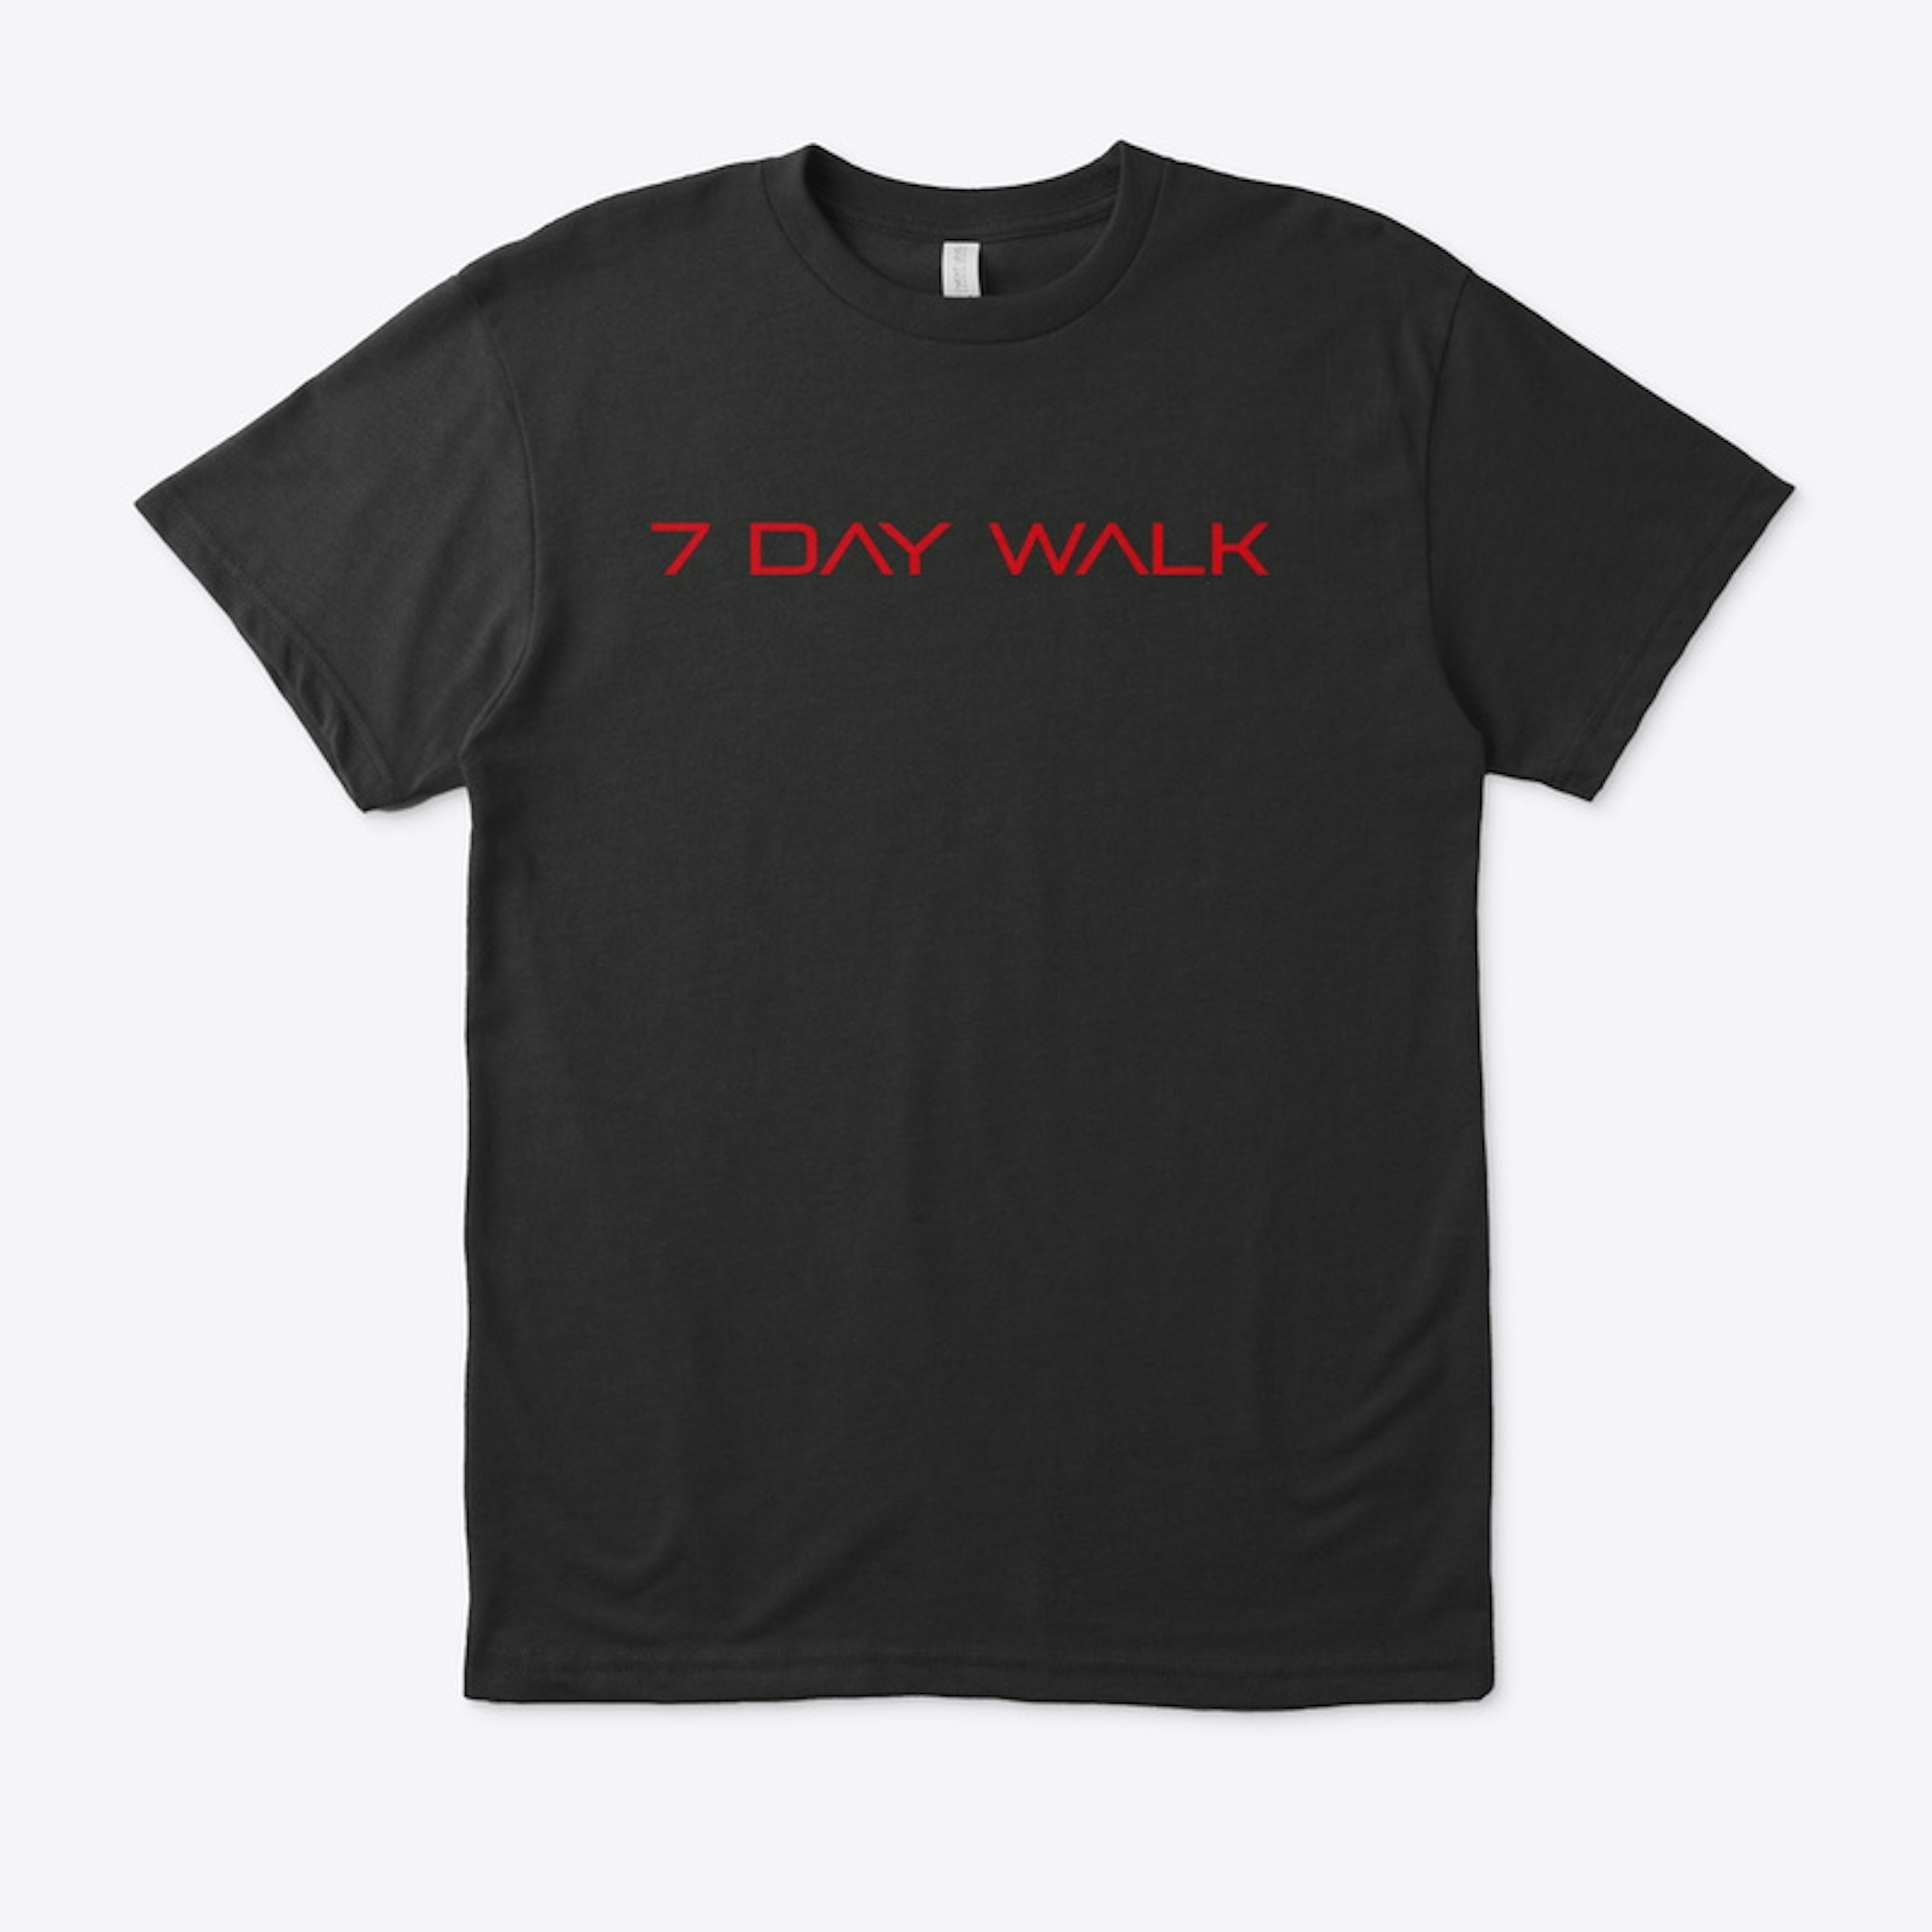 7DW future shirt